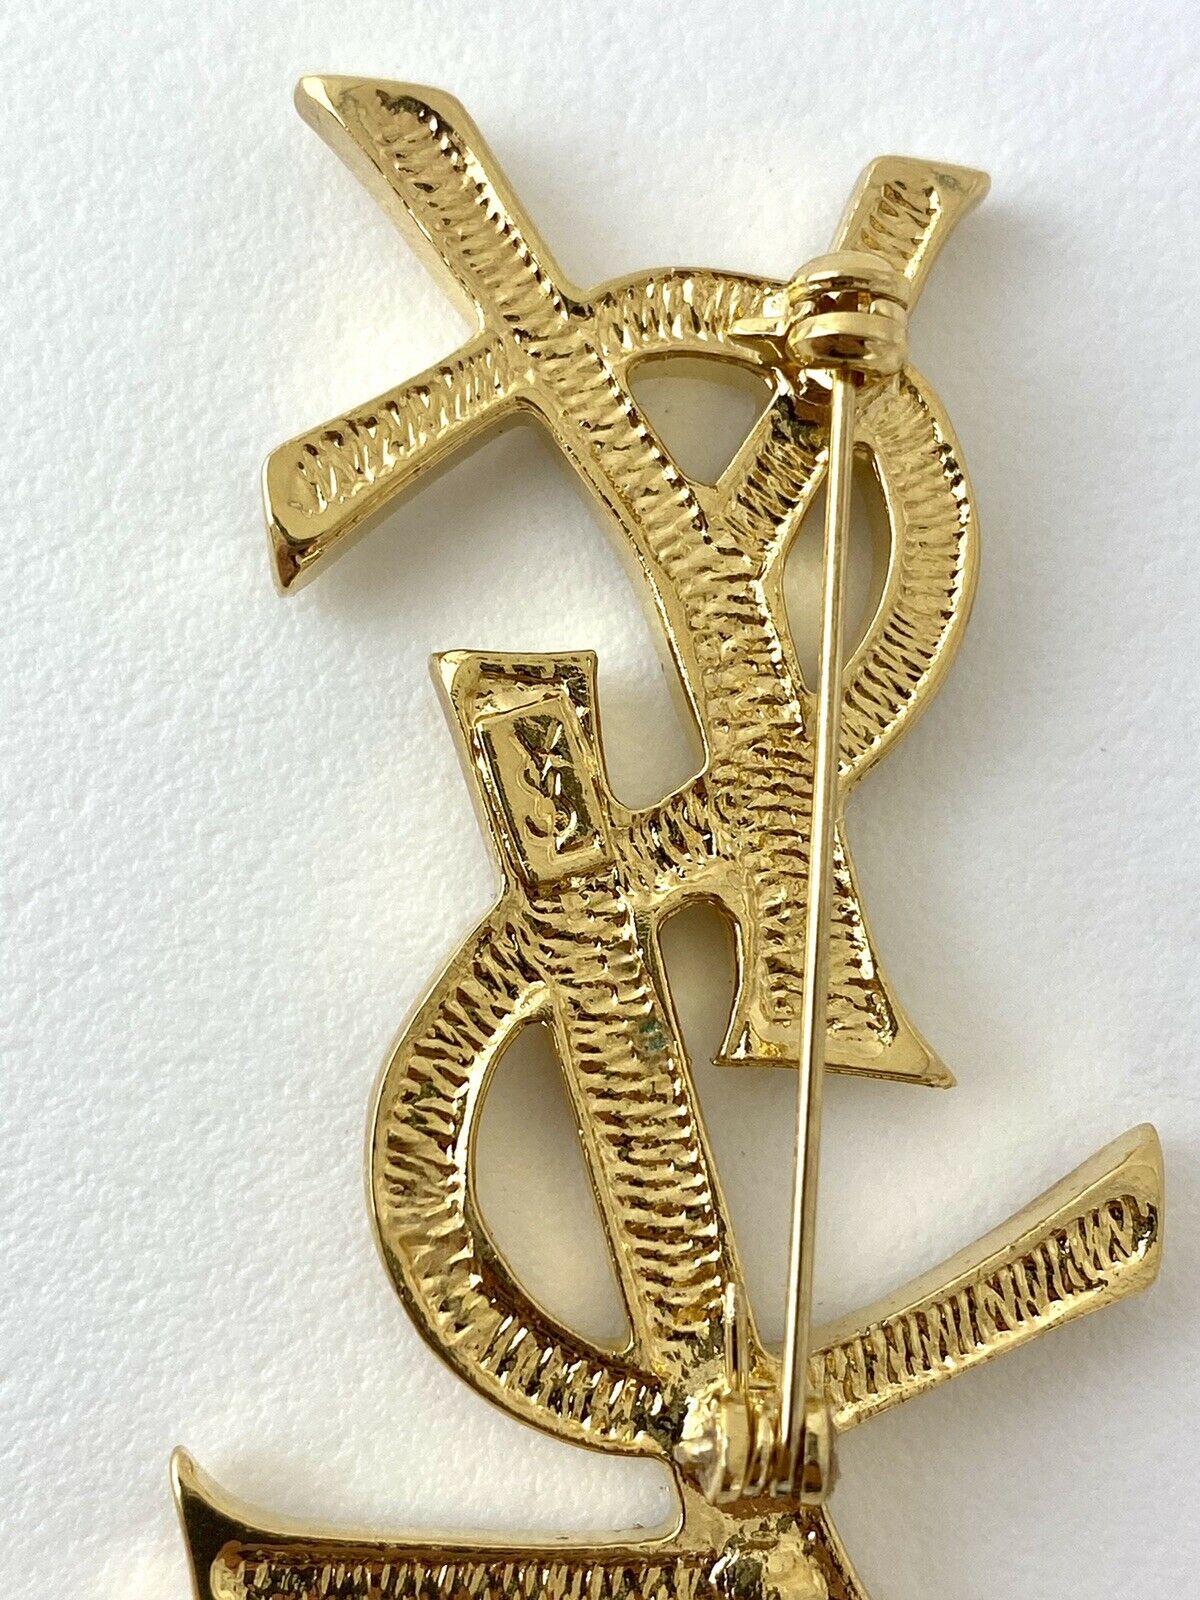 BujorJapan Vintage Ysl Brooch Pin, Yves Saint Laurent Heart Brooch Pin, Black Rhinestones, Gold Tone Brooch, Jewelry for Women, Gift for Her